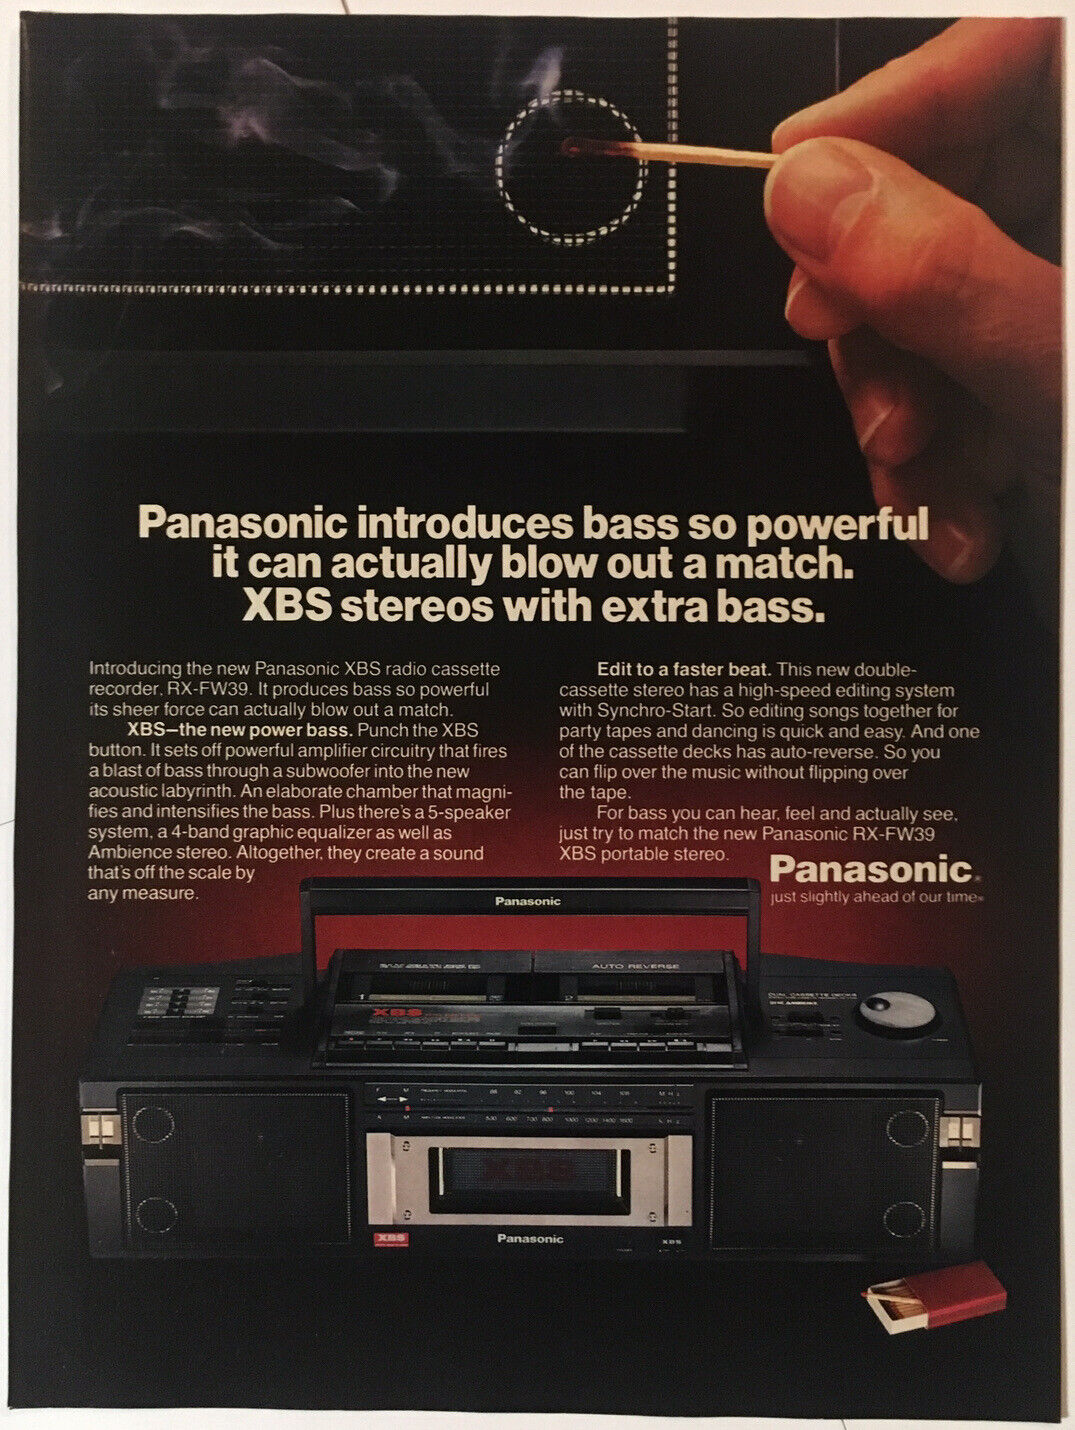 Panasonic XBS Stereo 1987 Vintage Print Ad 8x11 Inches Wall Decor